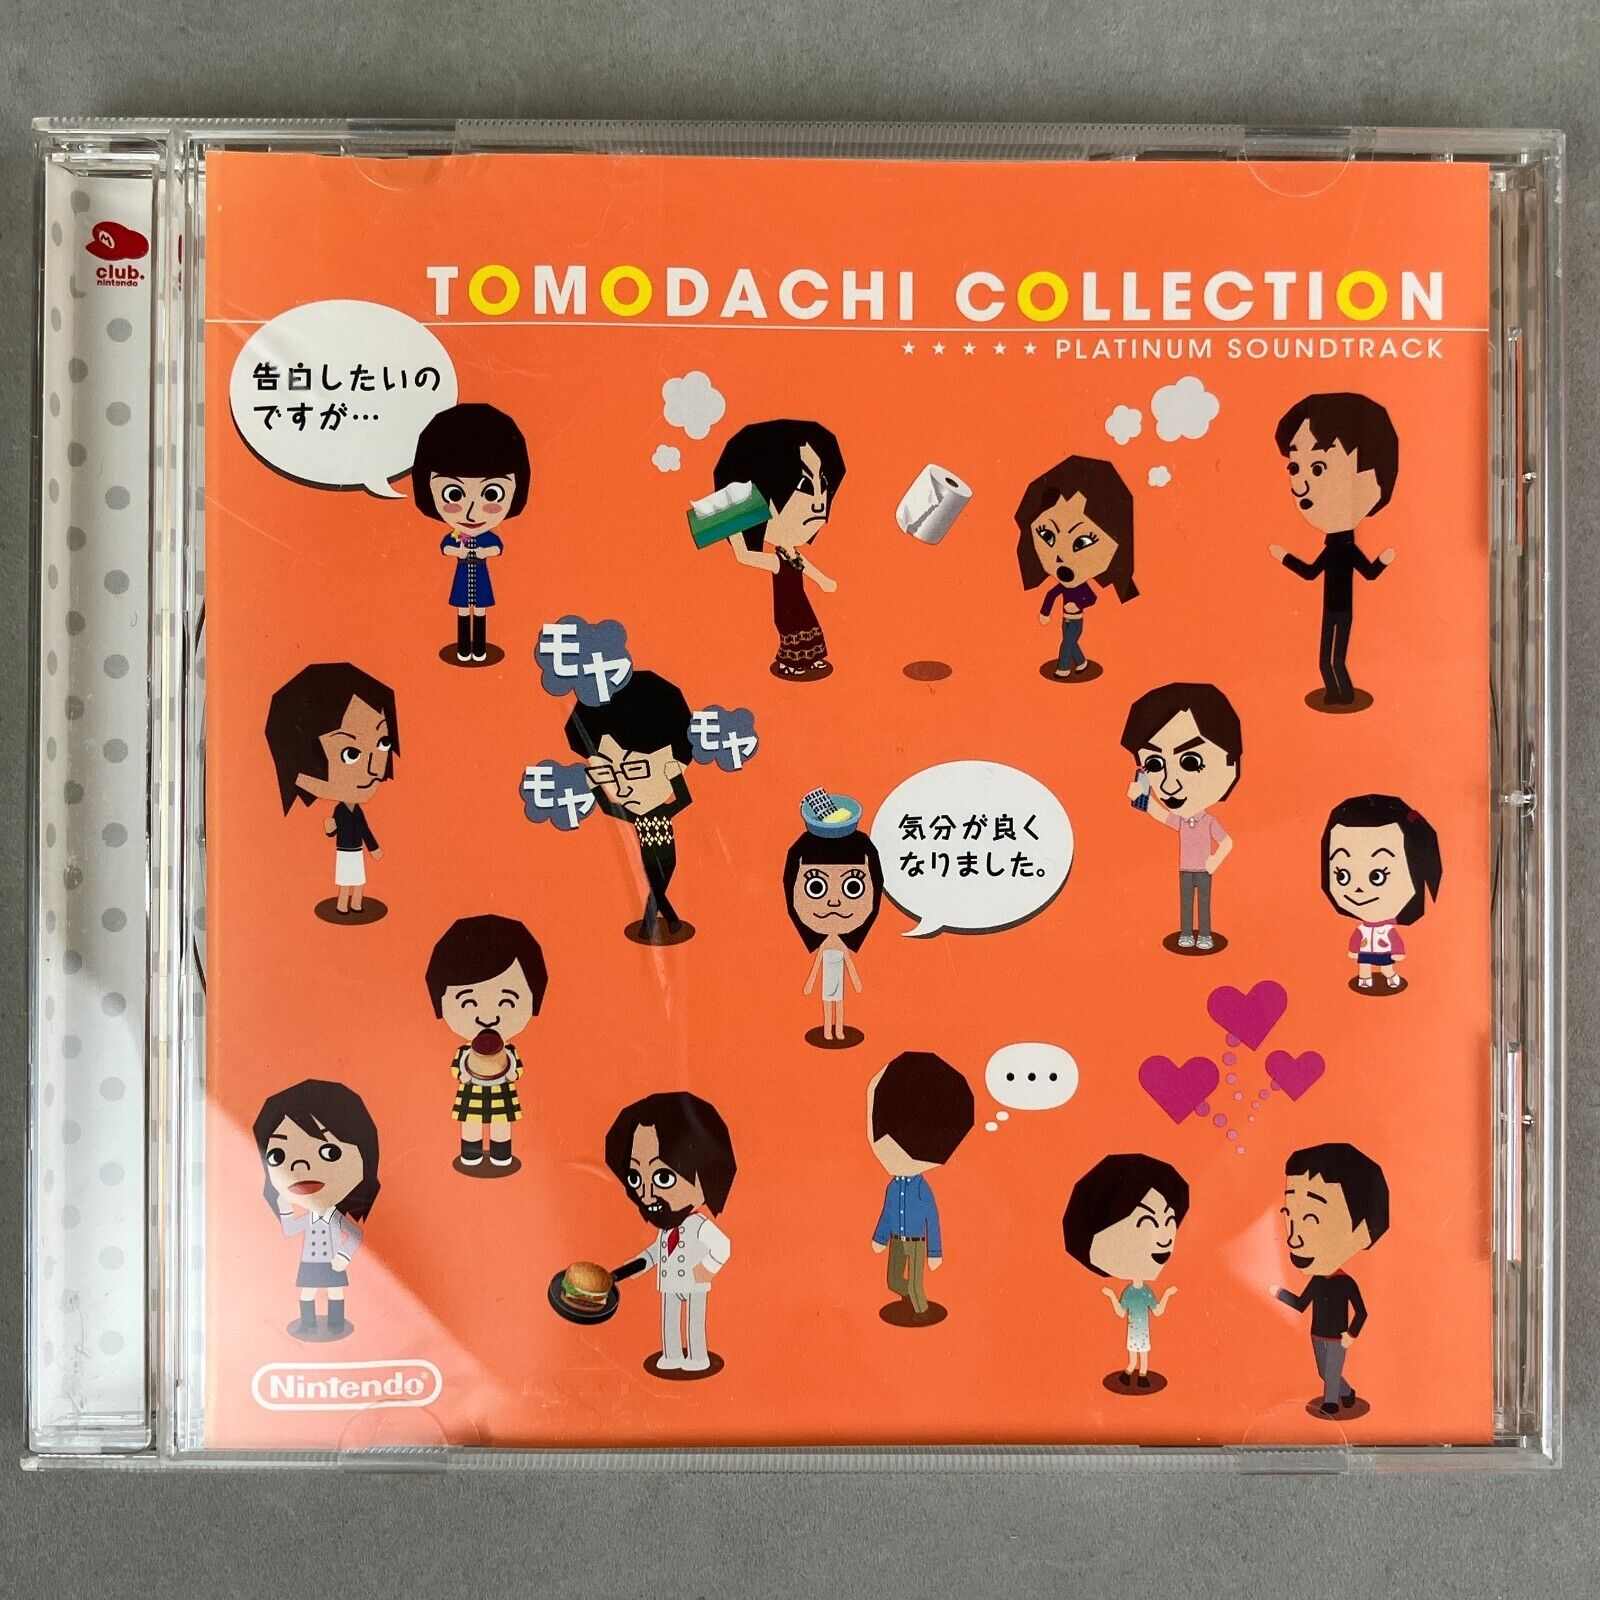 Club Nintendo Tomodachi Collection Platinum Soundtrack CD Japan Import